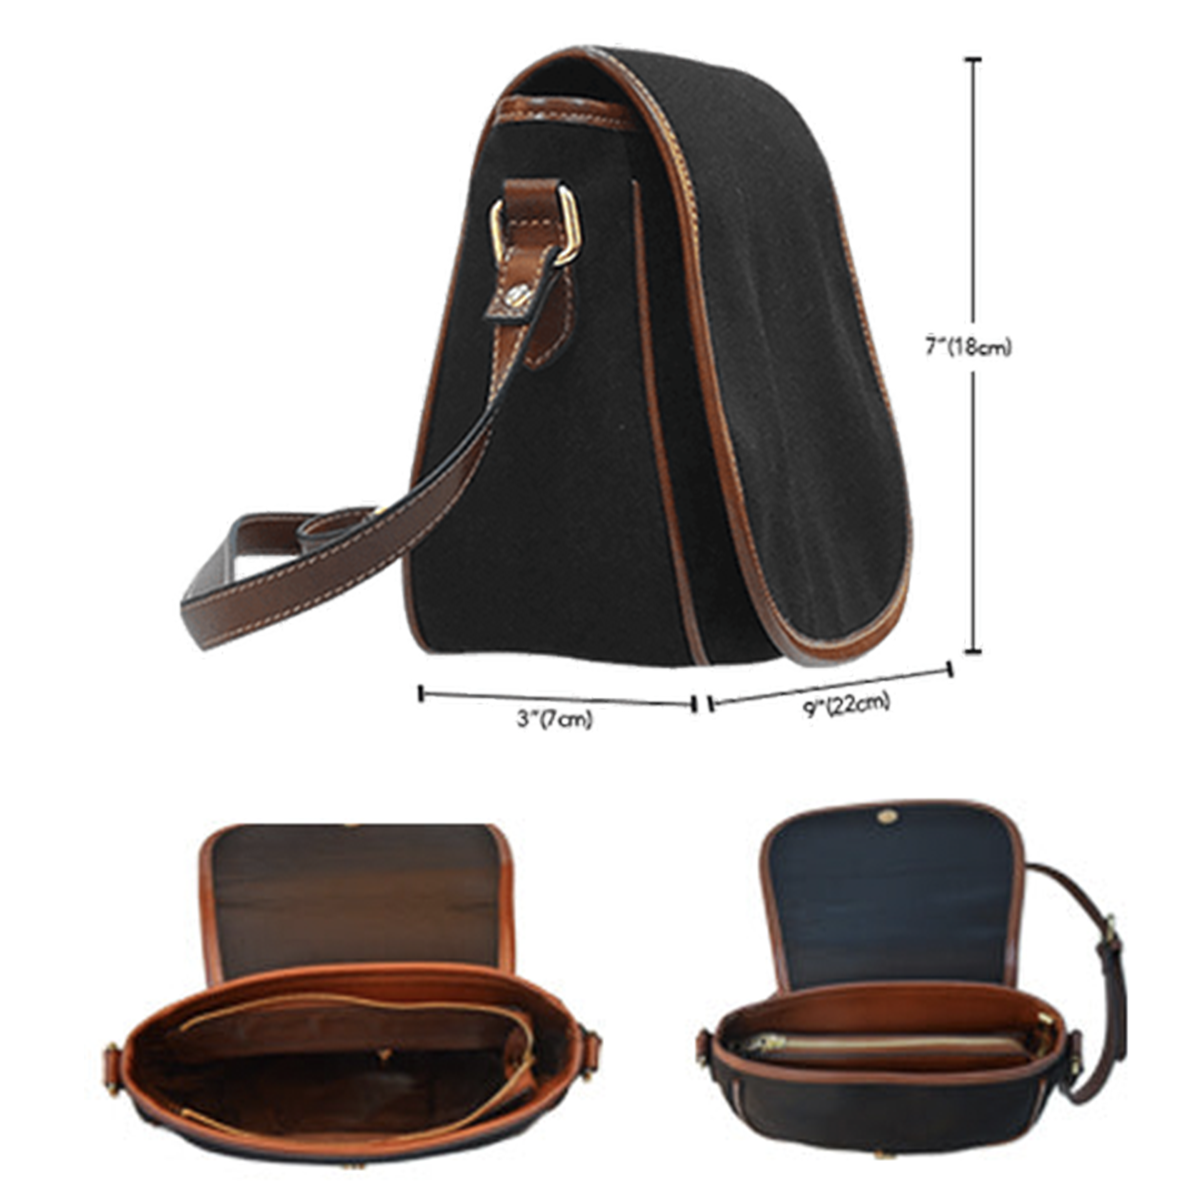 Douglas Brown Tartan Saddle Handbags